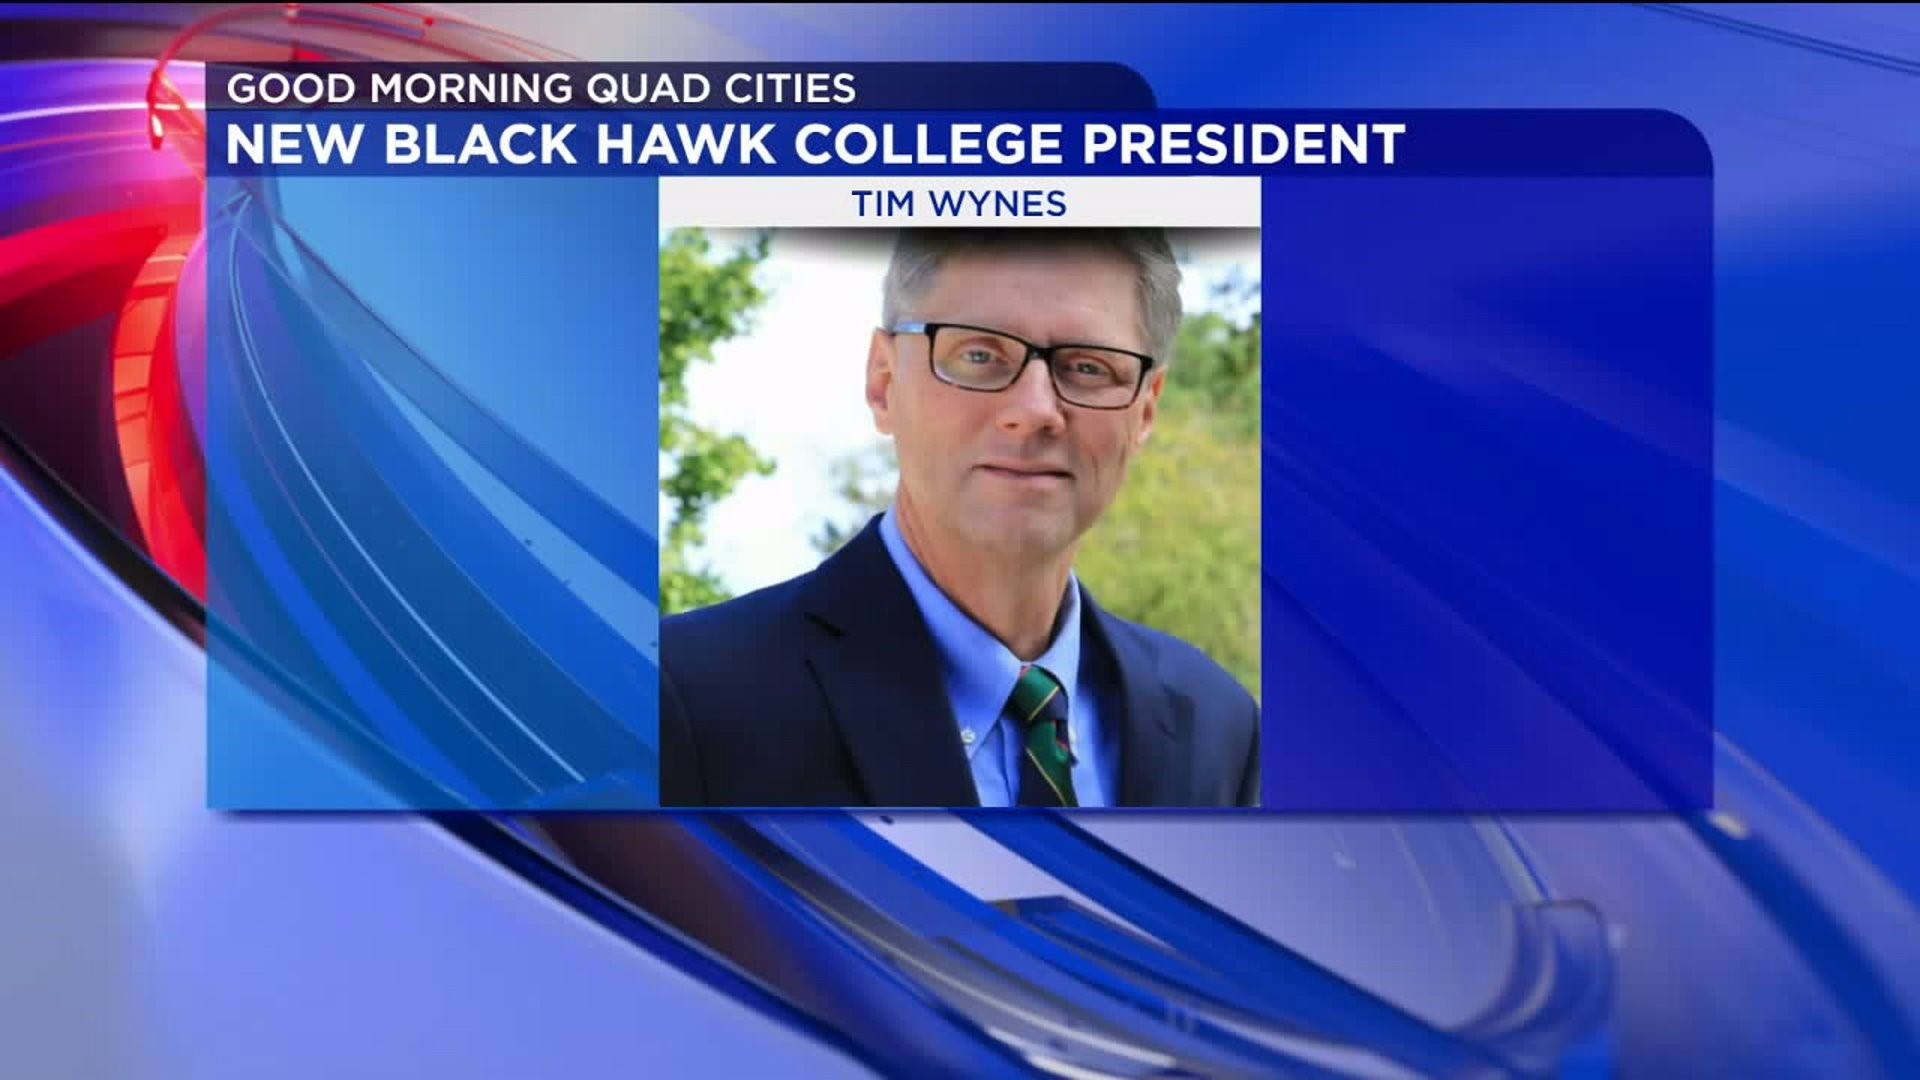 New Black Hawk College President